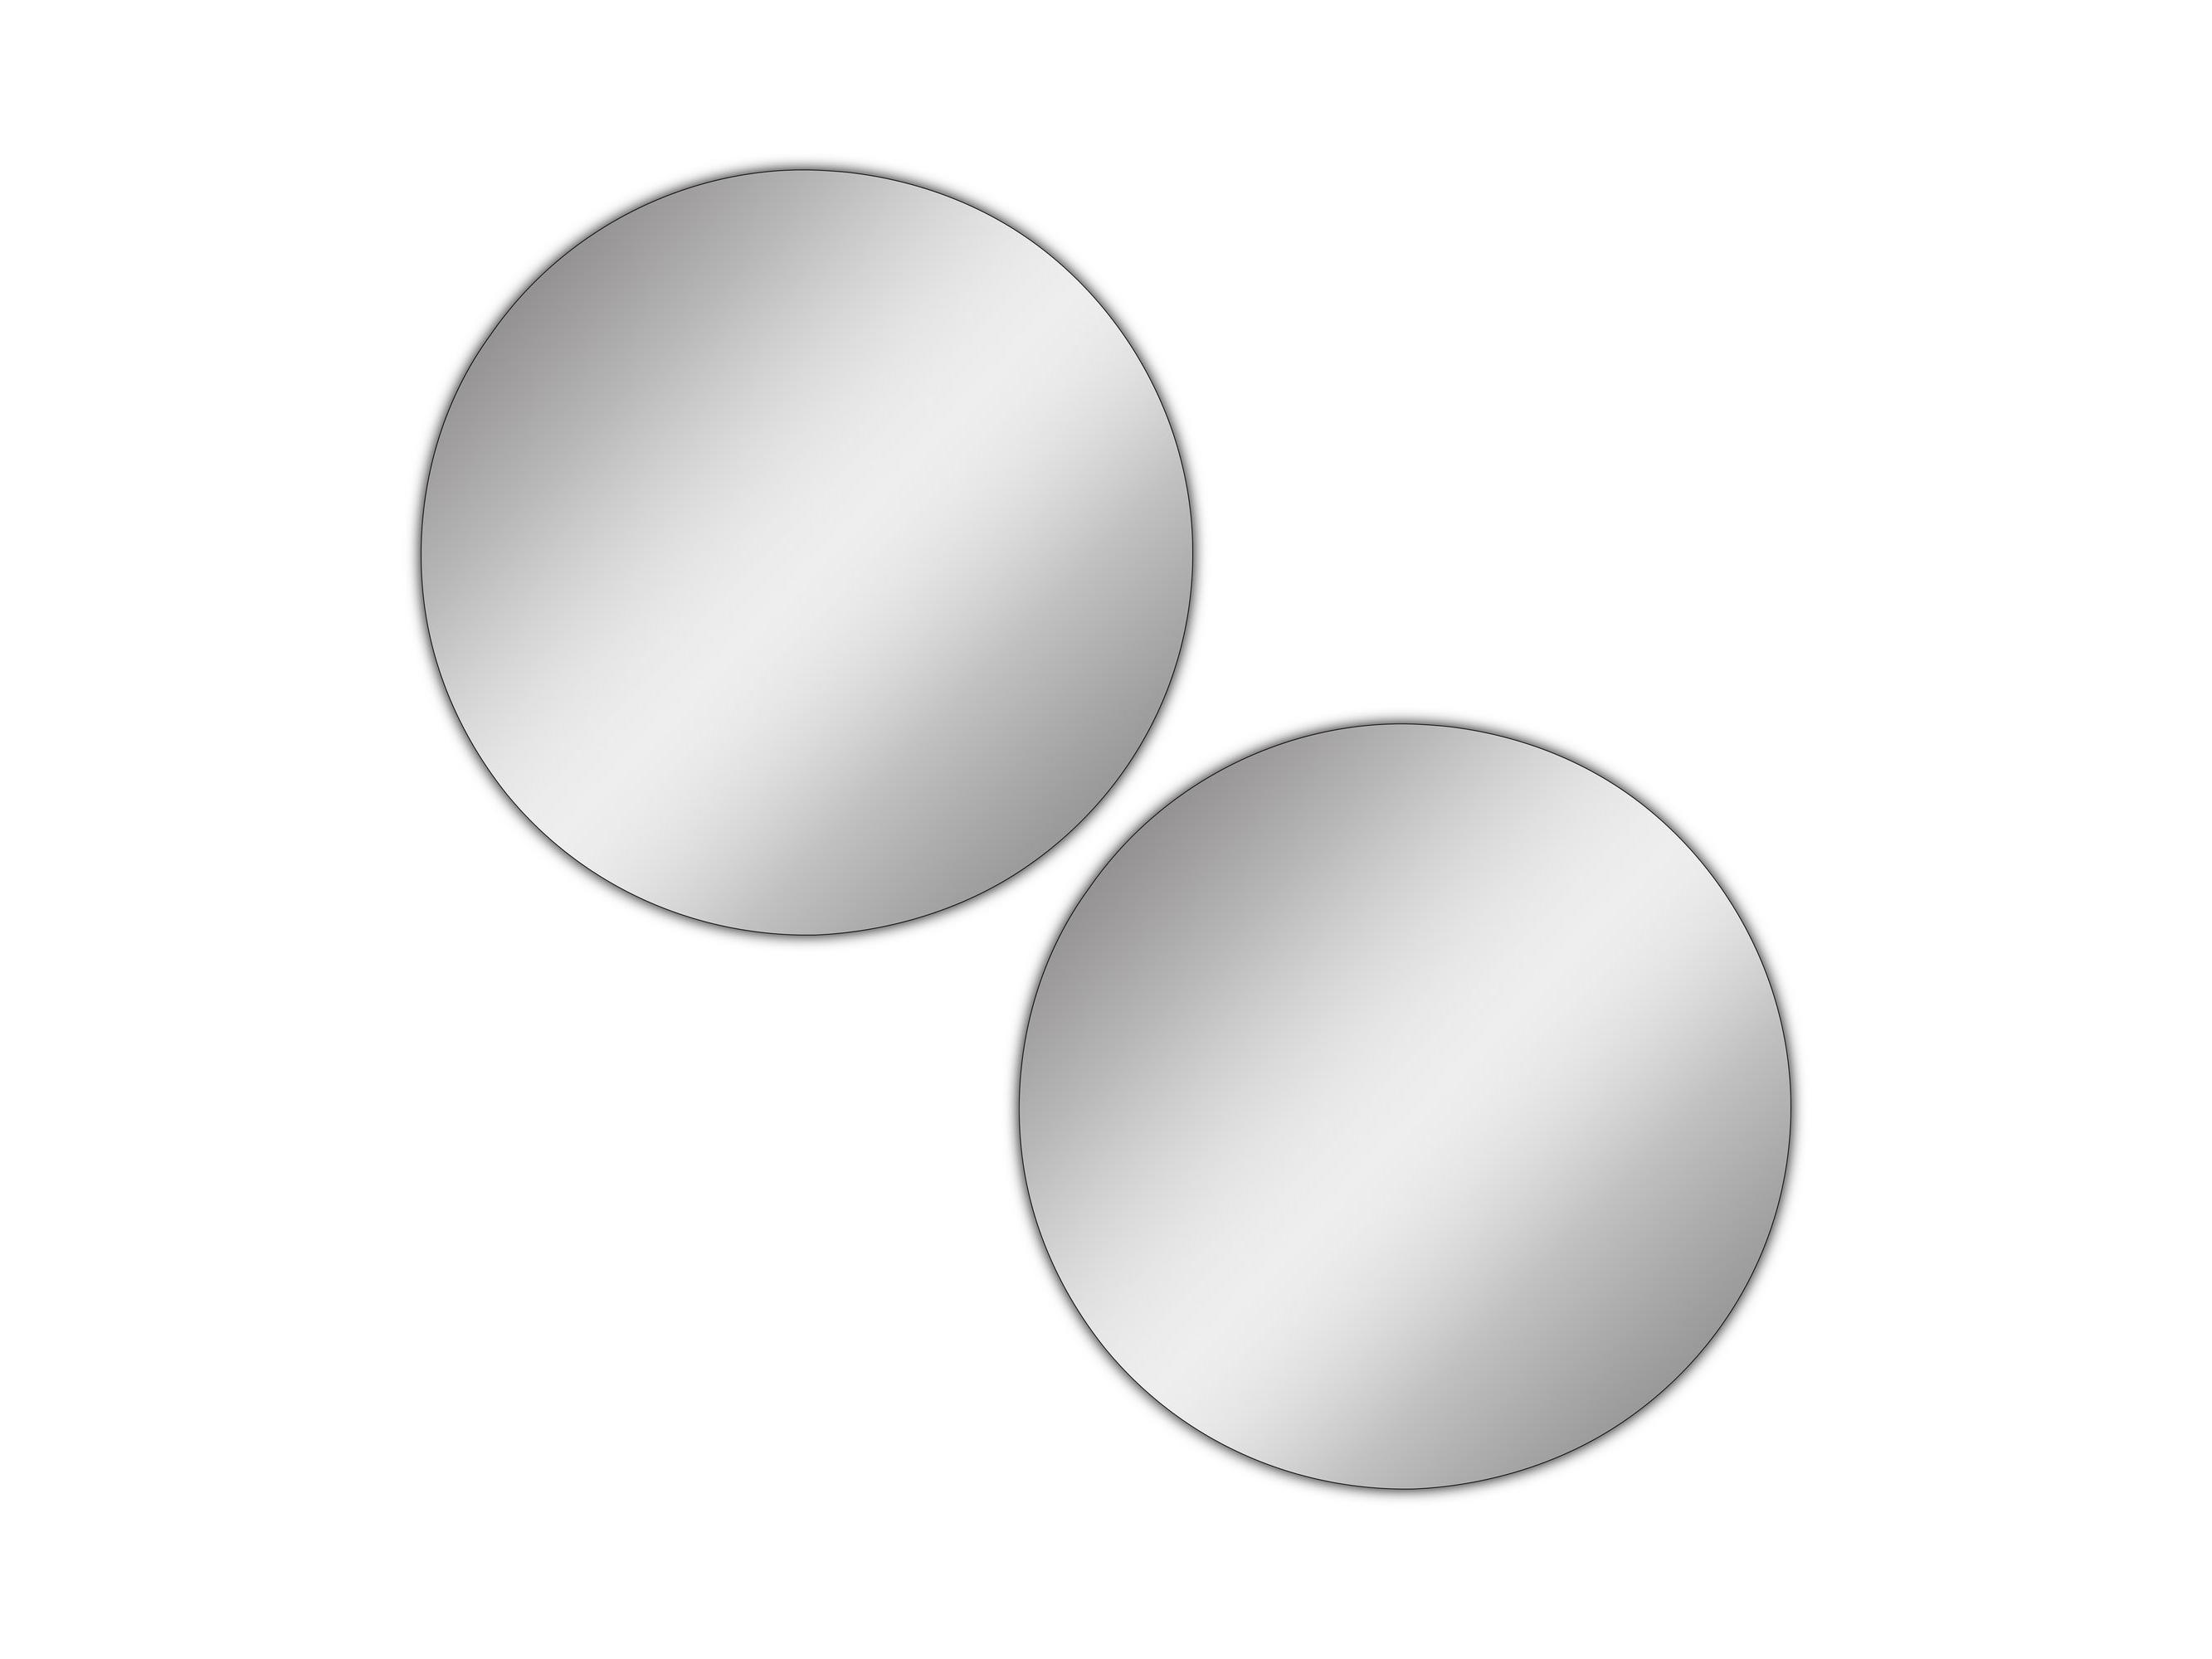  Zrcadlo Moluvu 2 (stříbrná)